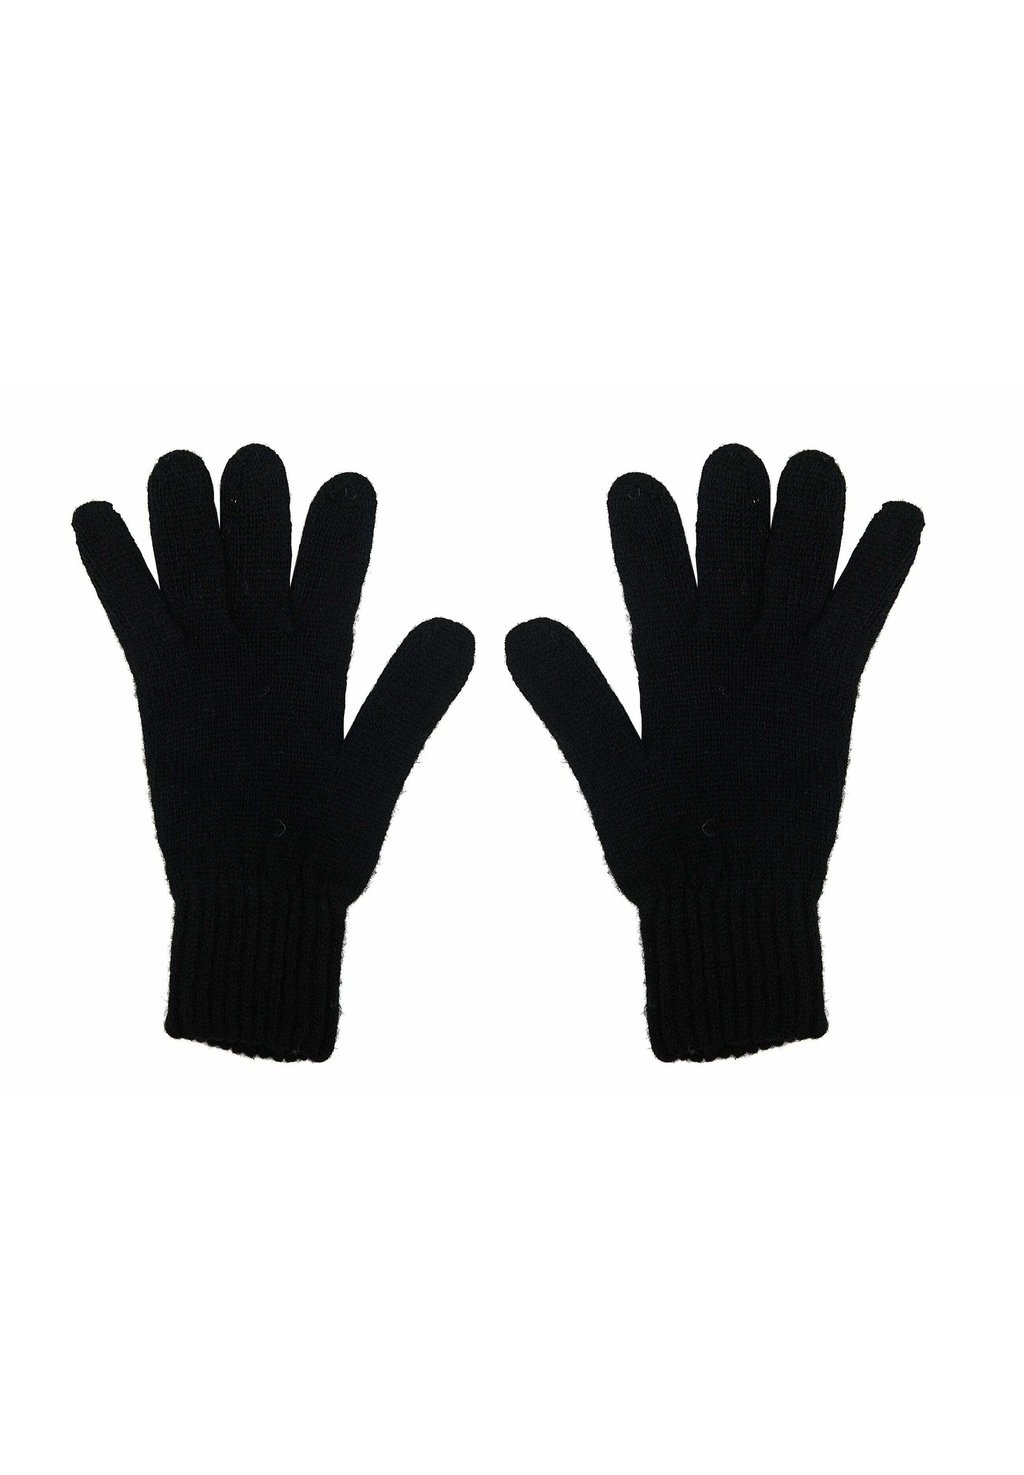 Перчатки Dalle Piane Cashmere, черные перчатки uniqlo cashmere бежевый